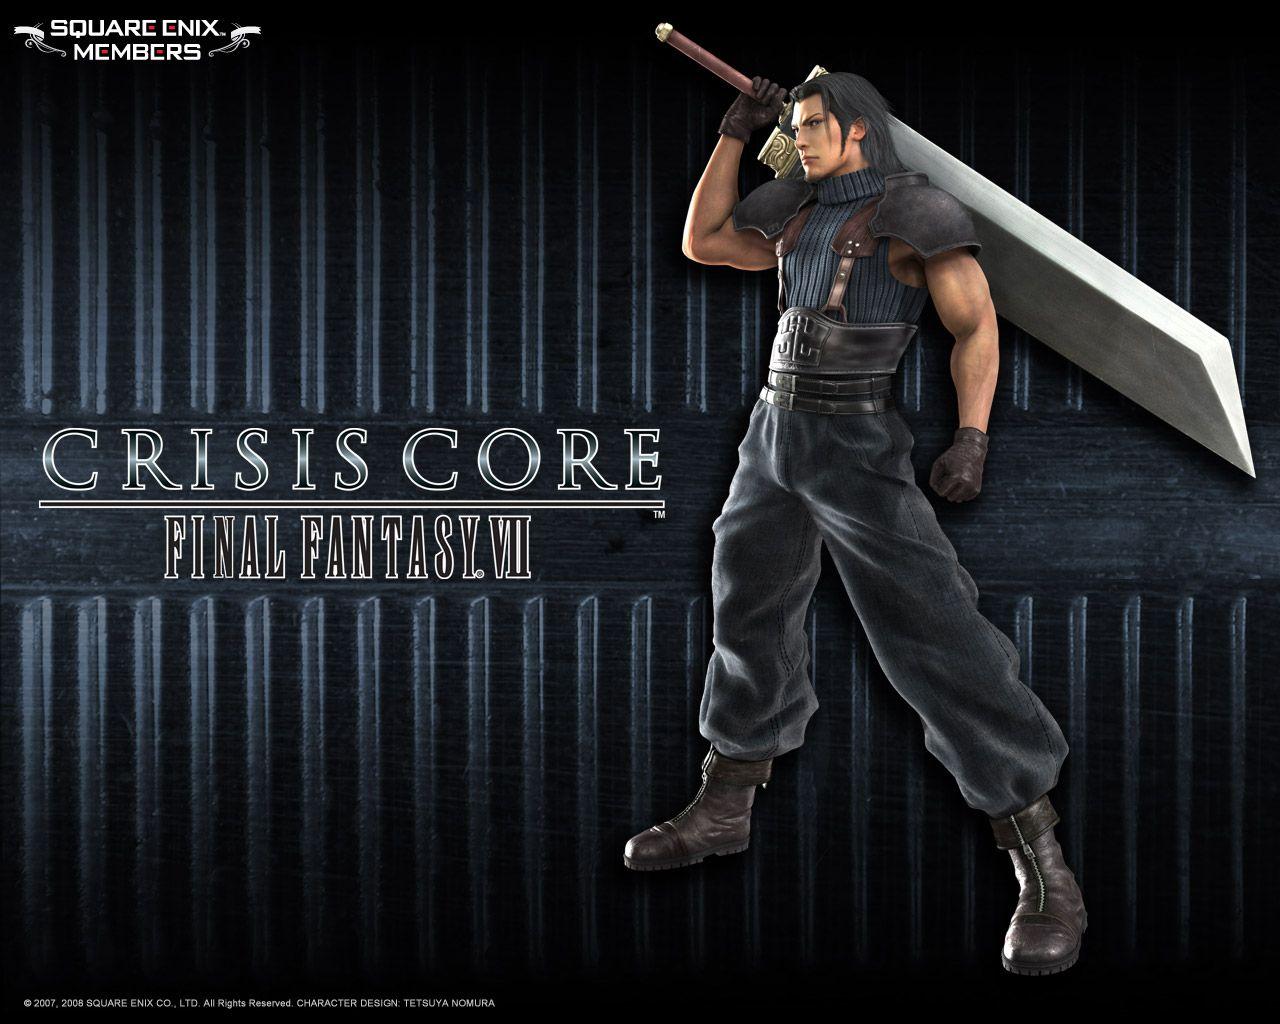 Final Fantasy Final Fantasy VII: Crisis Core Games